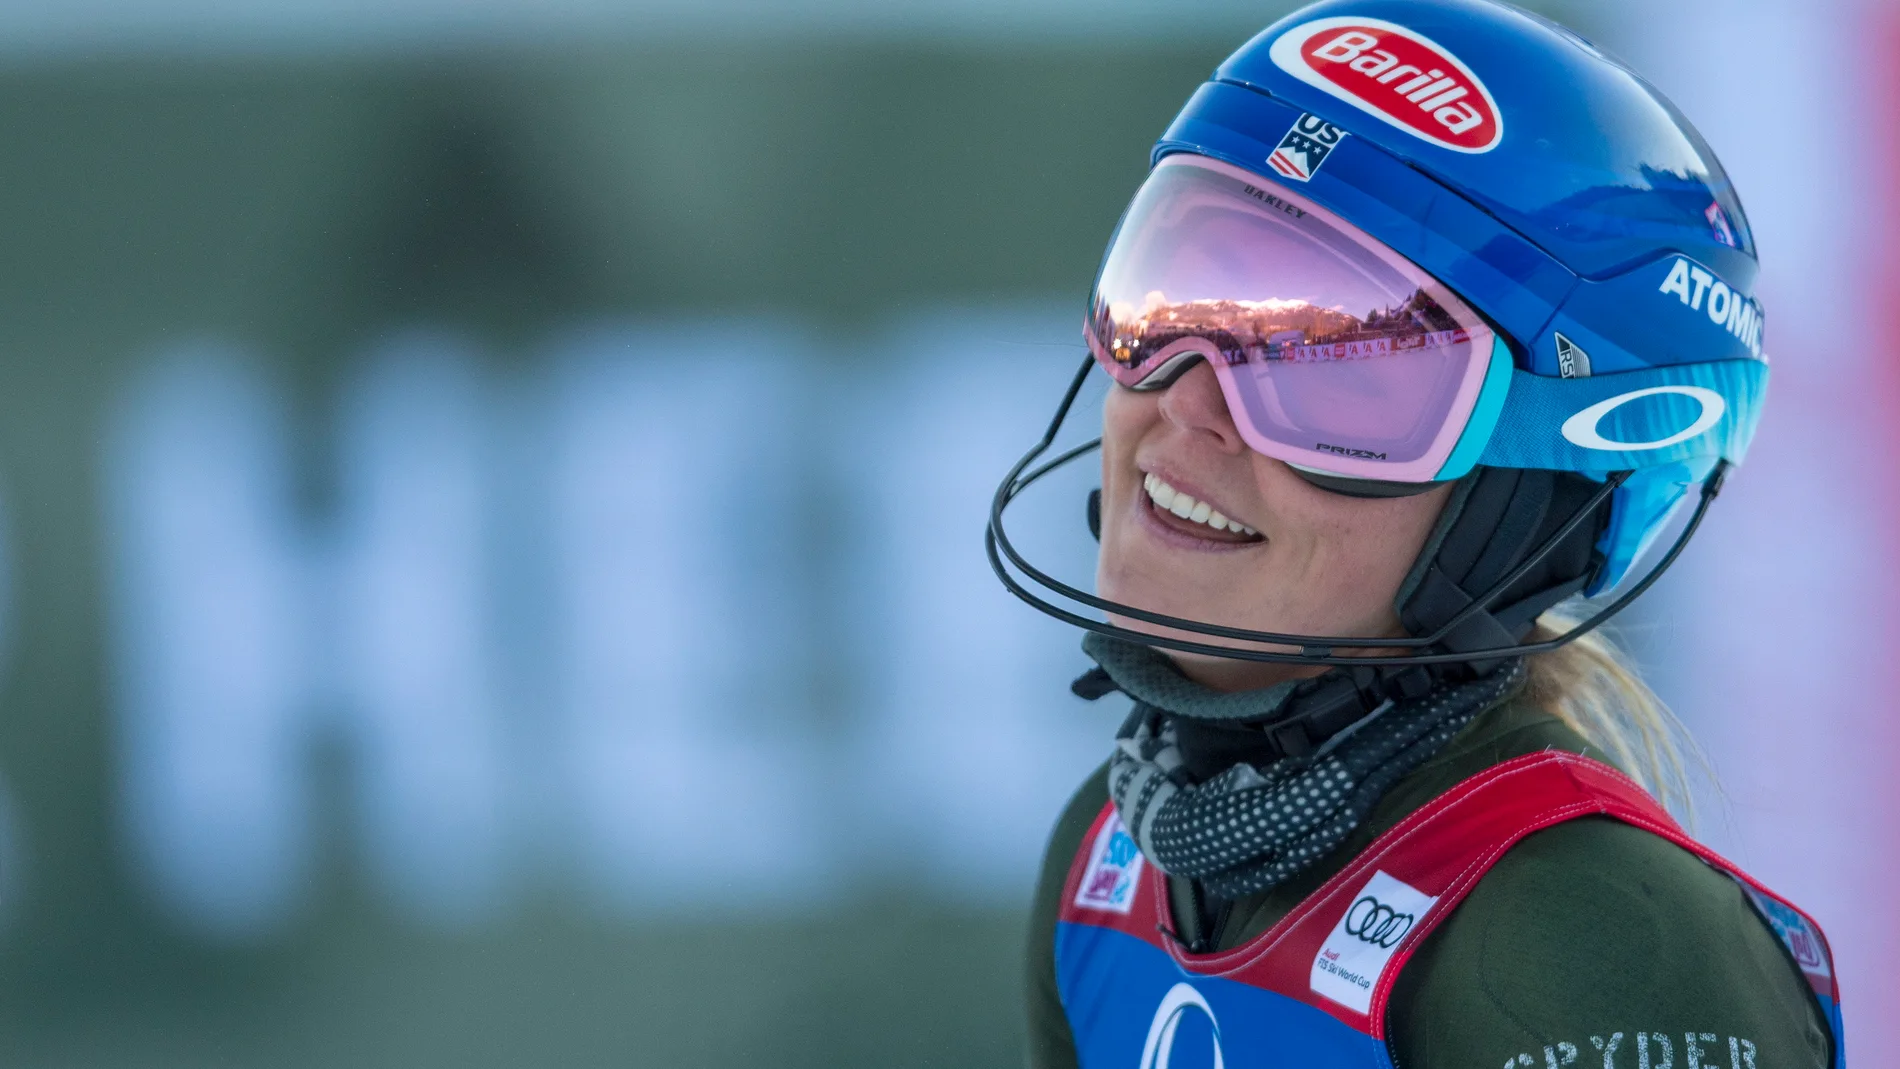 FIS Alpine Skiing World Cup in Lienz